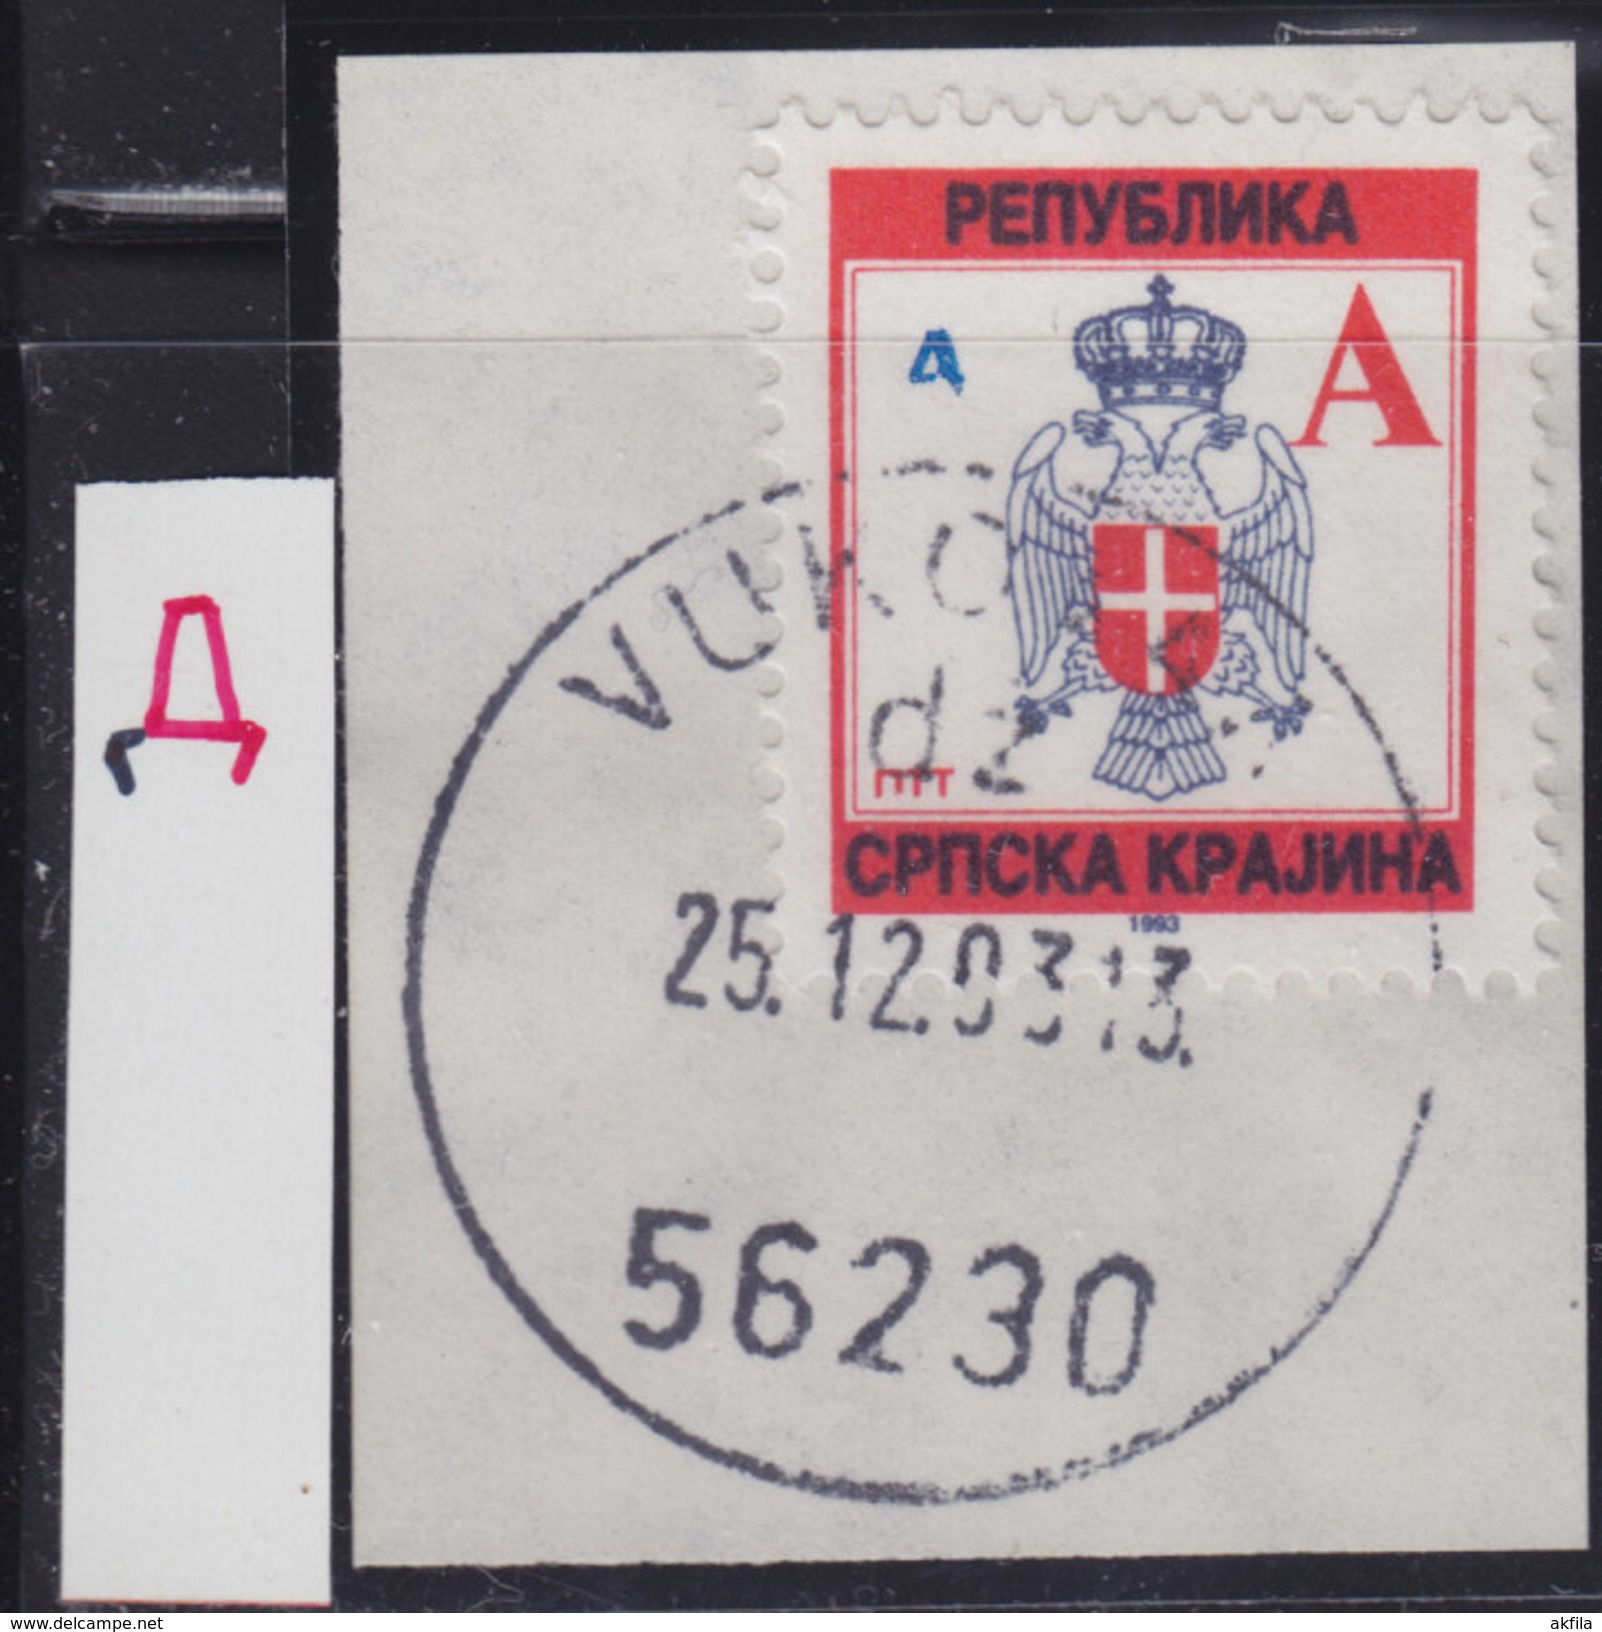 Croatia Republic Of Serbian Krajina 1993 Error - Broken Cyrillic "D", Cutting, Used (o) Michel 17 - Kroatien